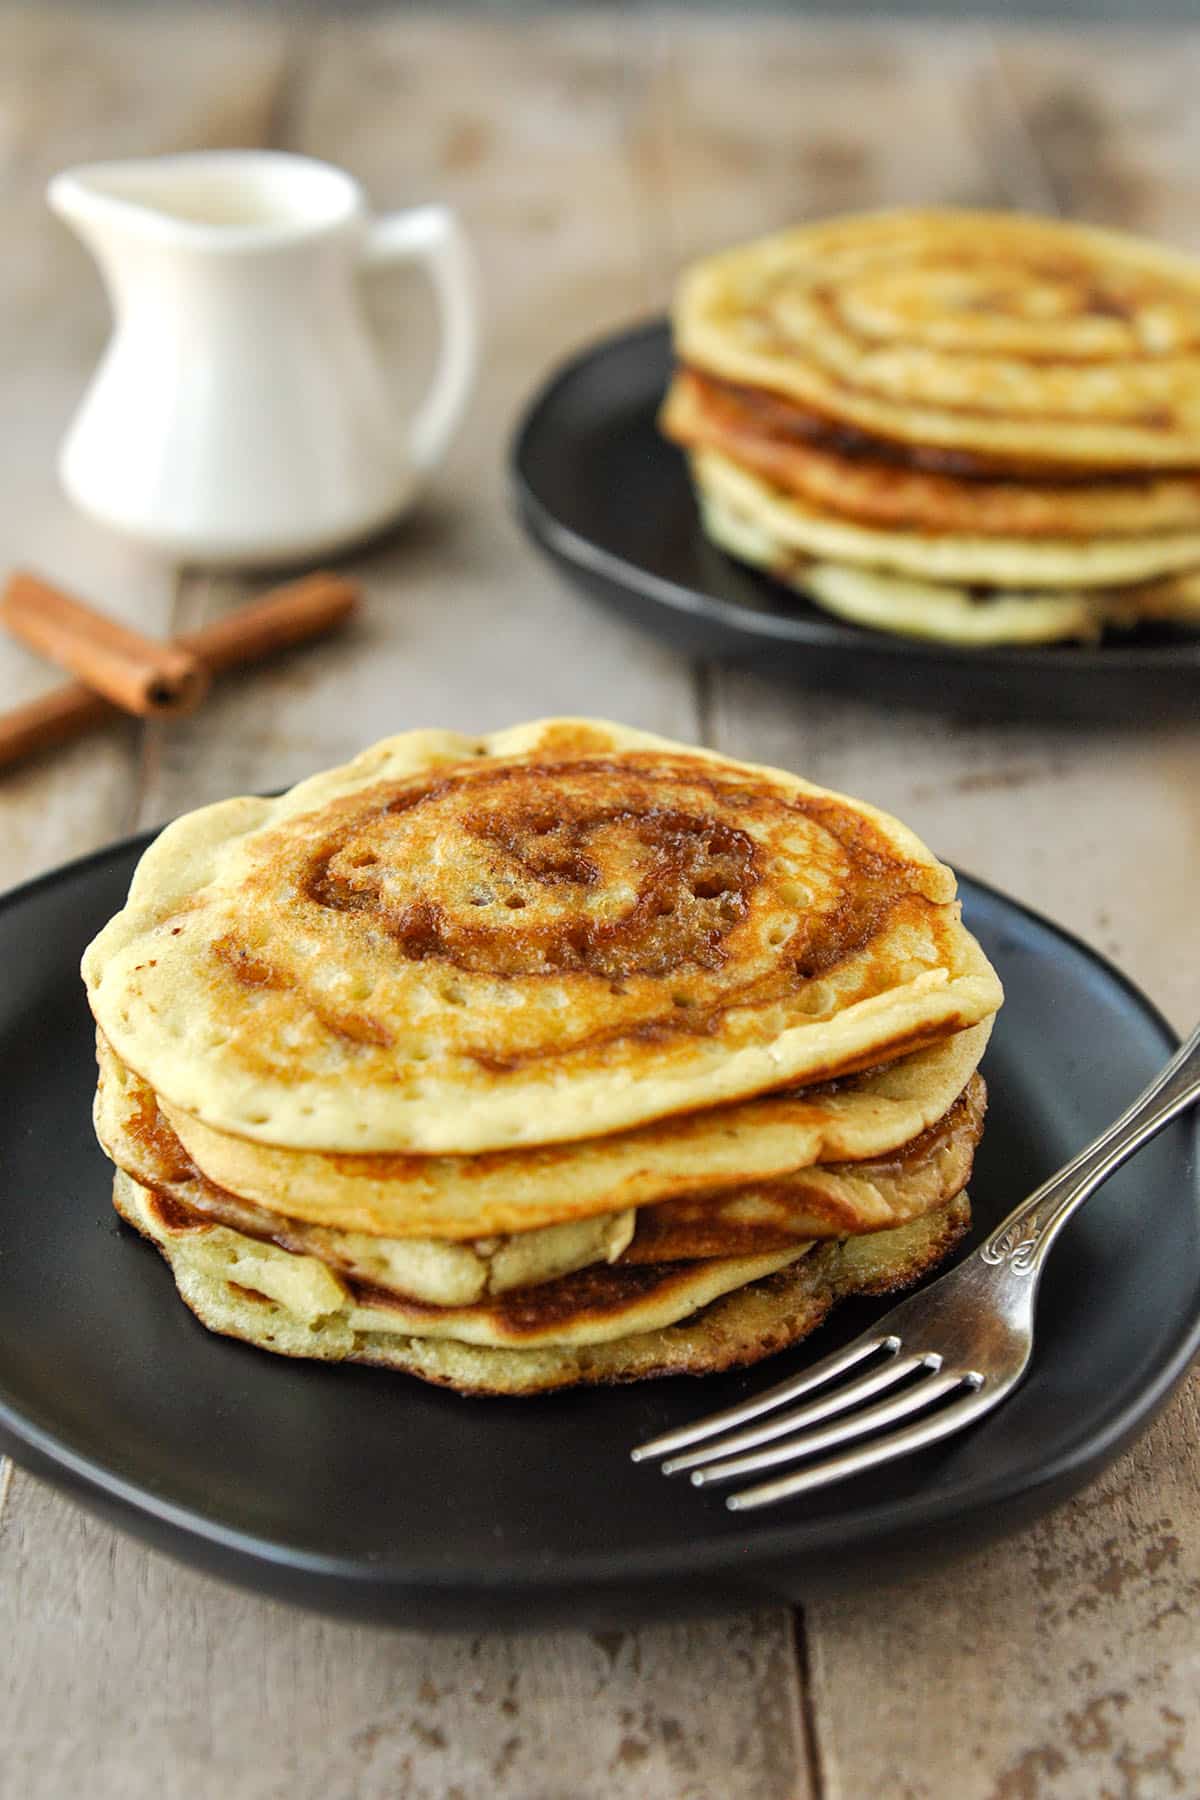 Two plates of stacks of cinnamon swirl pancakes.